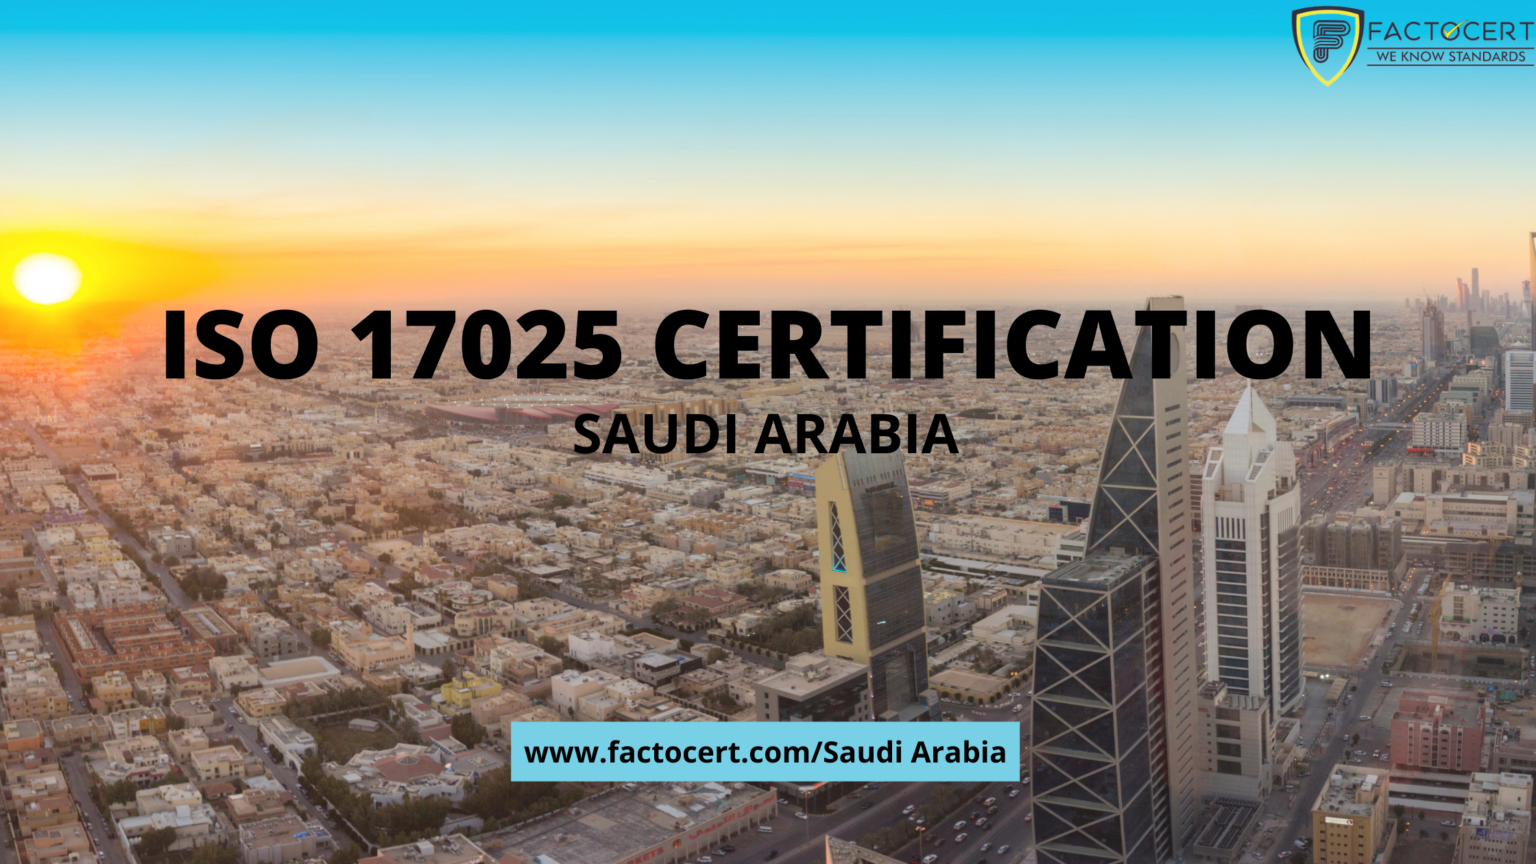 ISO 17025 Certification in Saudi Arabia Testing and Calibration